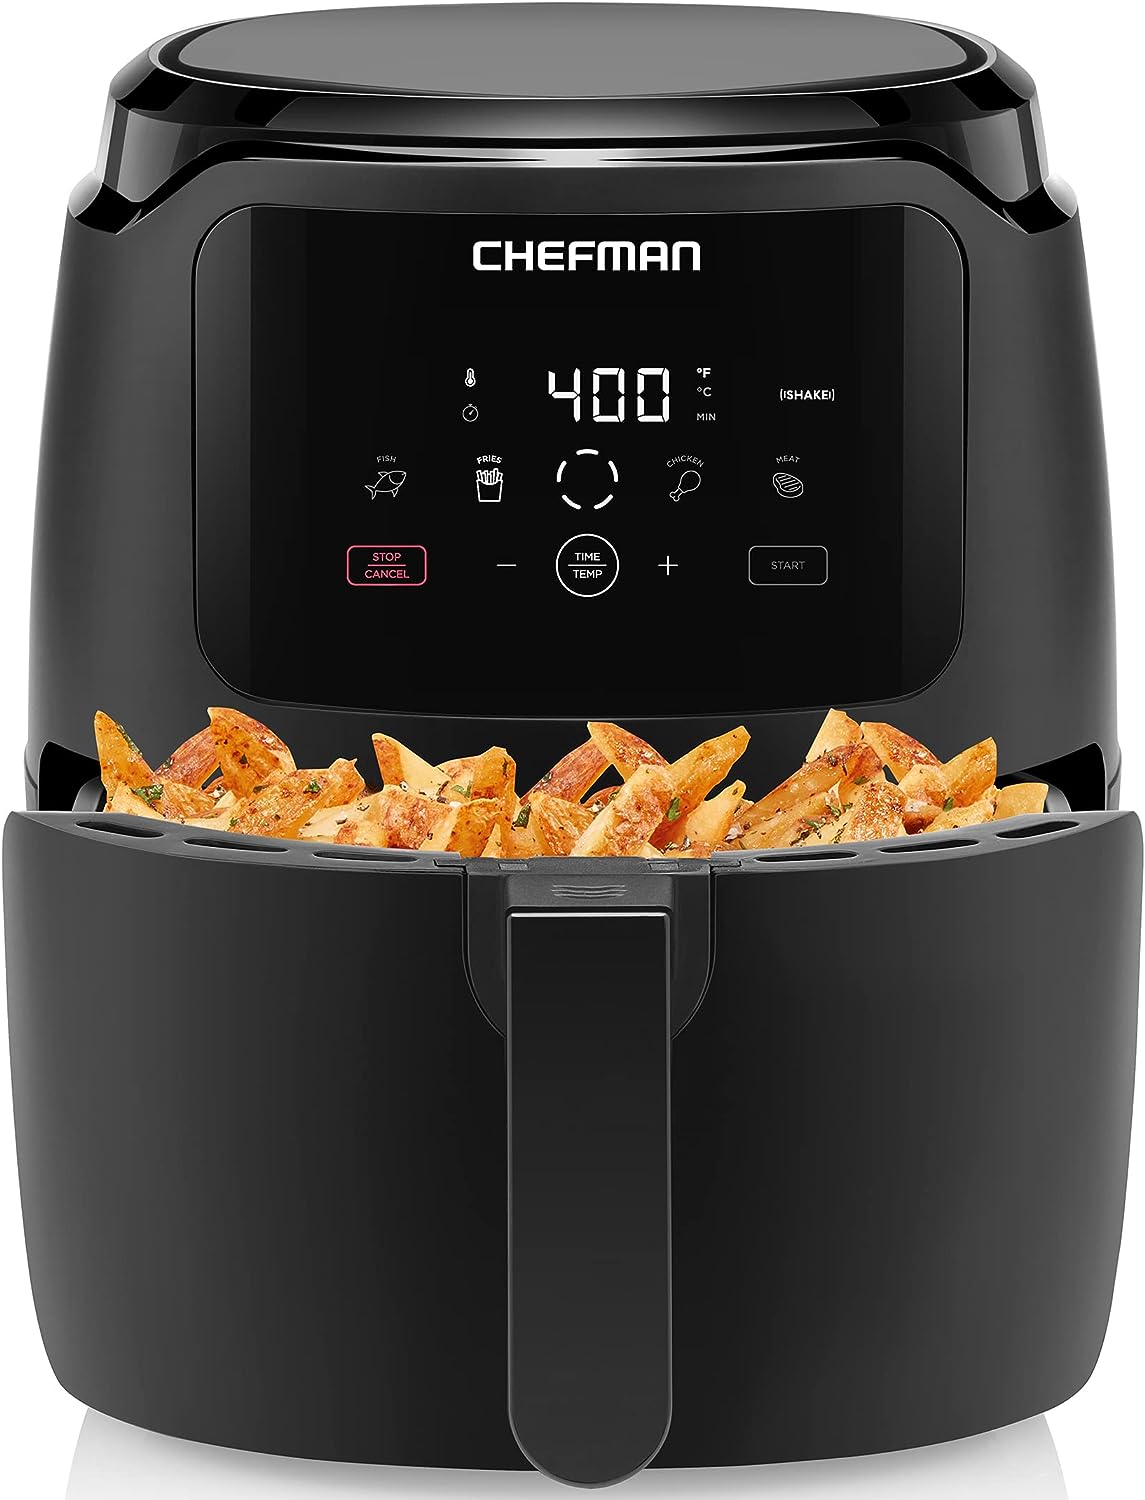 Chefman Digital Air Fryer